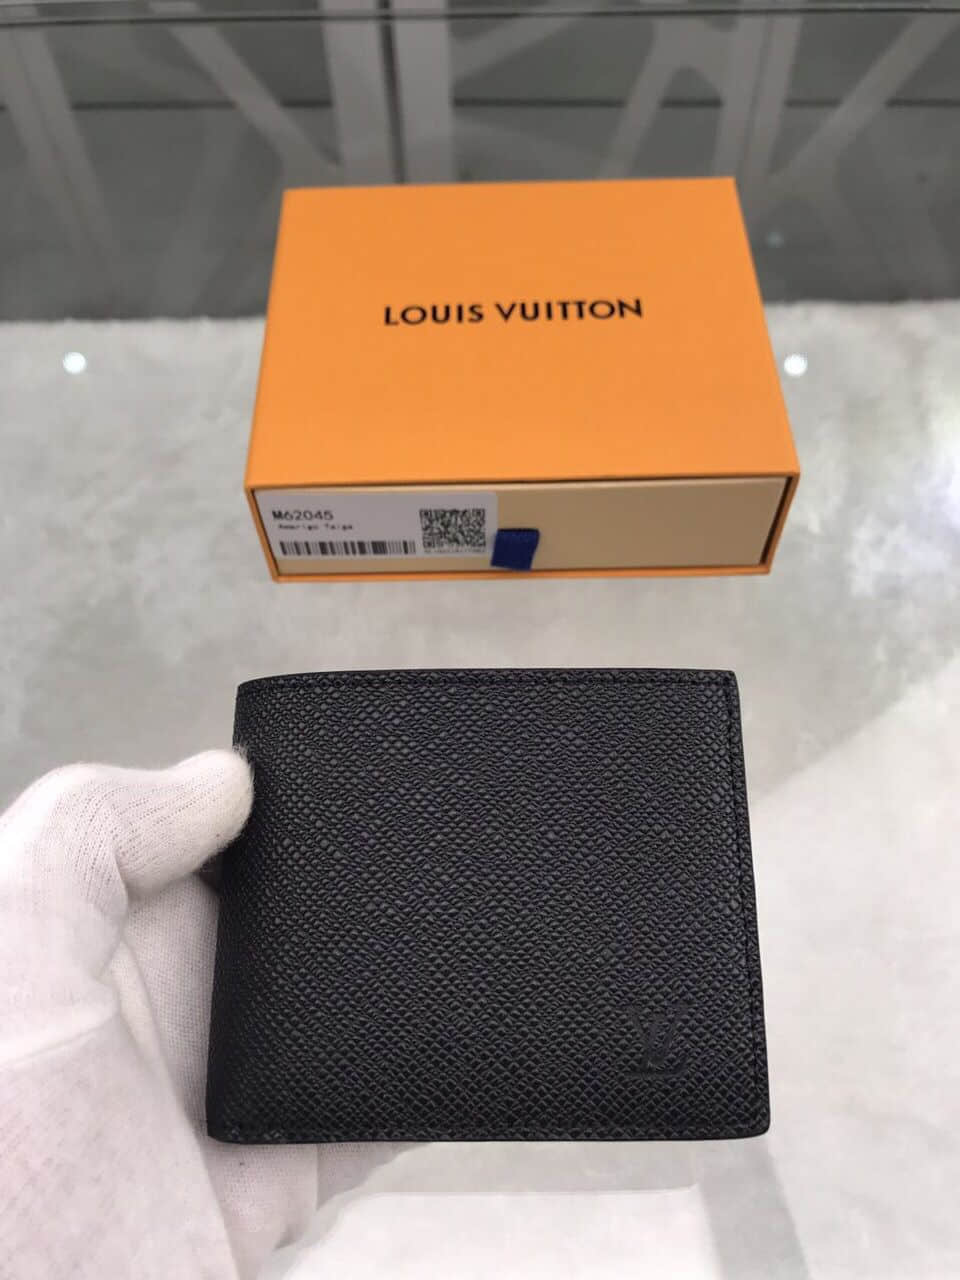 LOUIS VUITTON Amerigo Wallet M62045